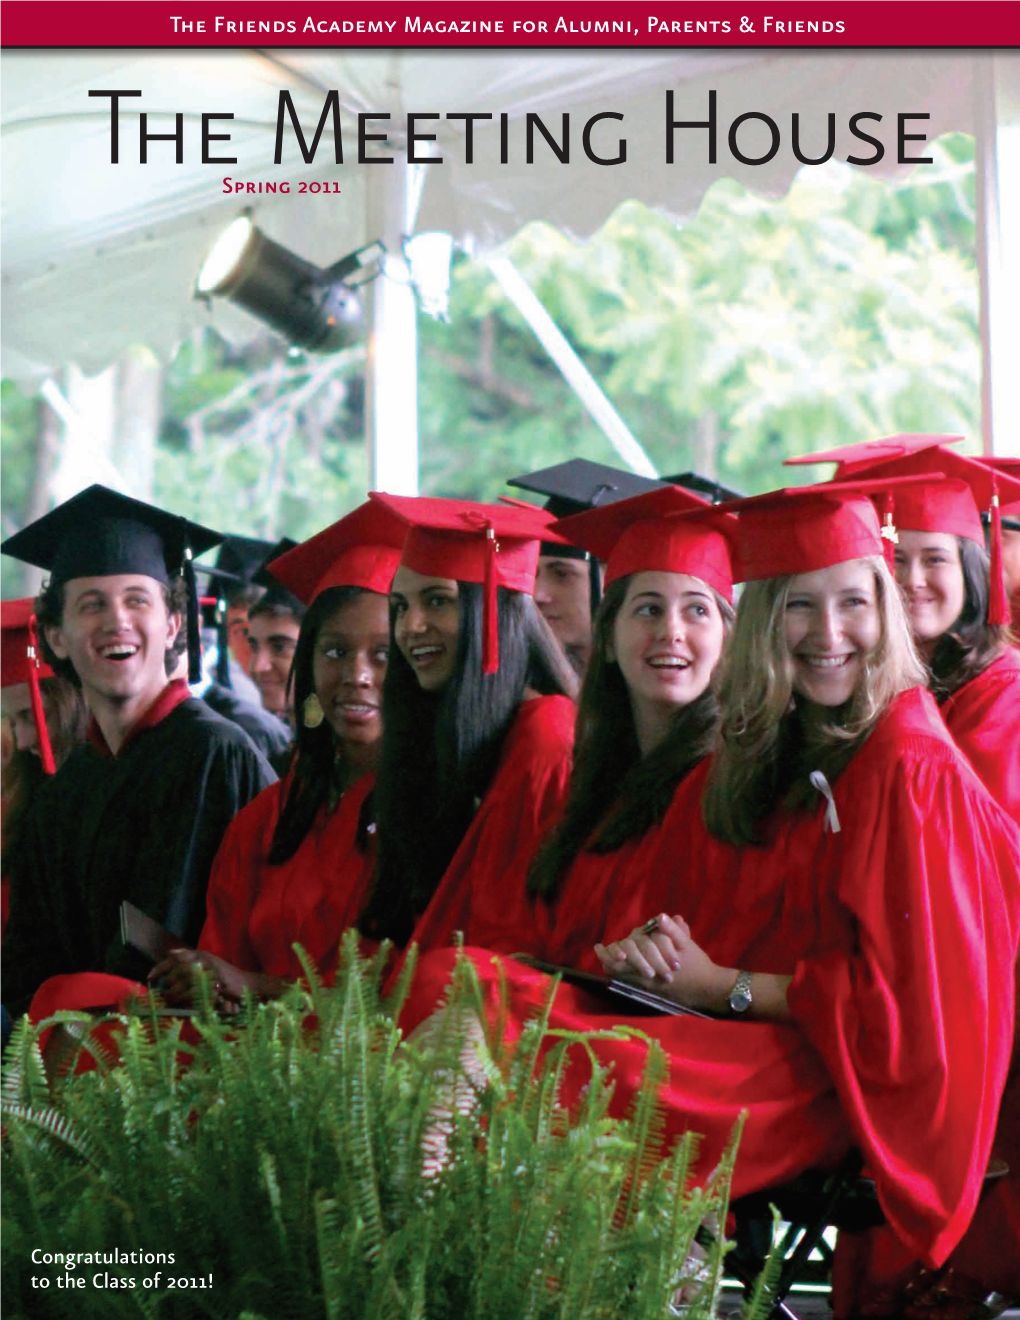 The Friends Academy Magazine for Alumni, Parents & Friends